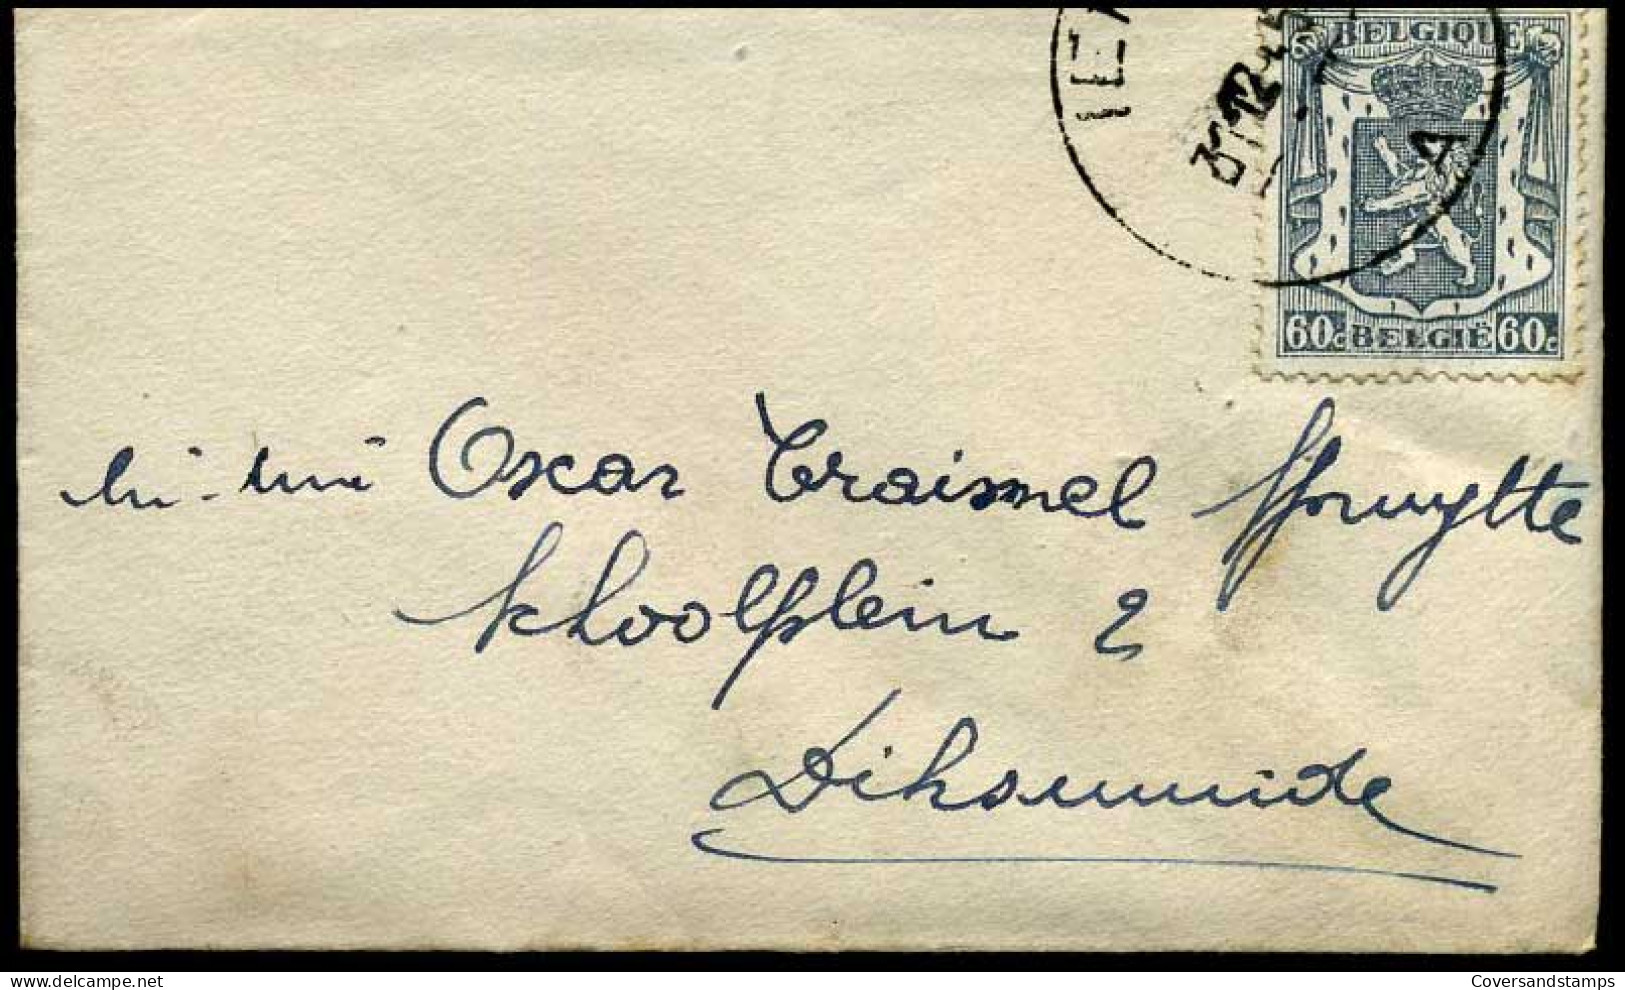 Kleine Envelop / Petite Enveloppe Met N° 527 - 1935-1949 Piccolo Sigillo Dello Stato